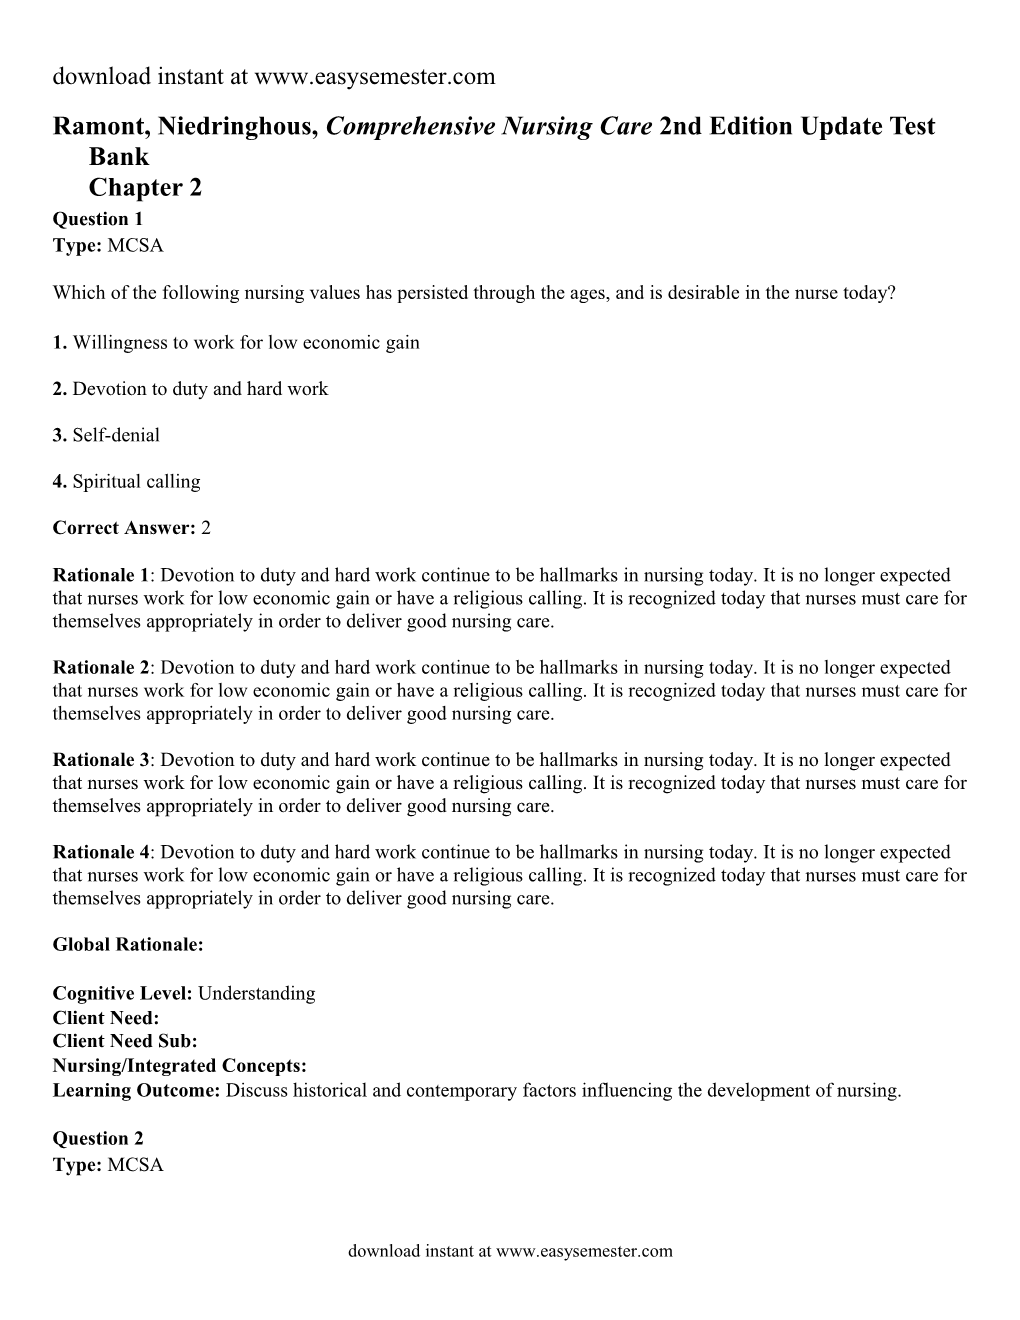 Ramont, Niedringhous, Comprehensive Nursing Care 2Nd Edition Update Test Bankchapter 2